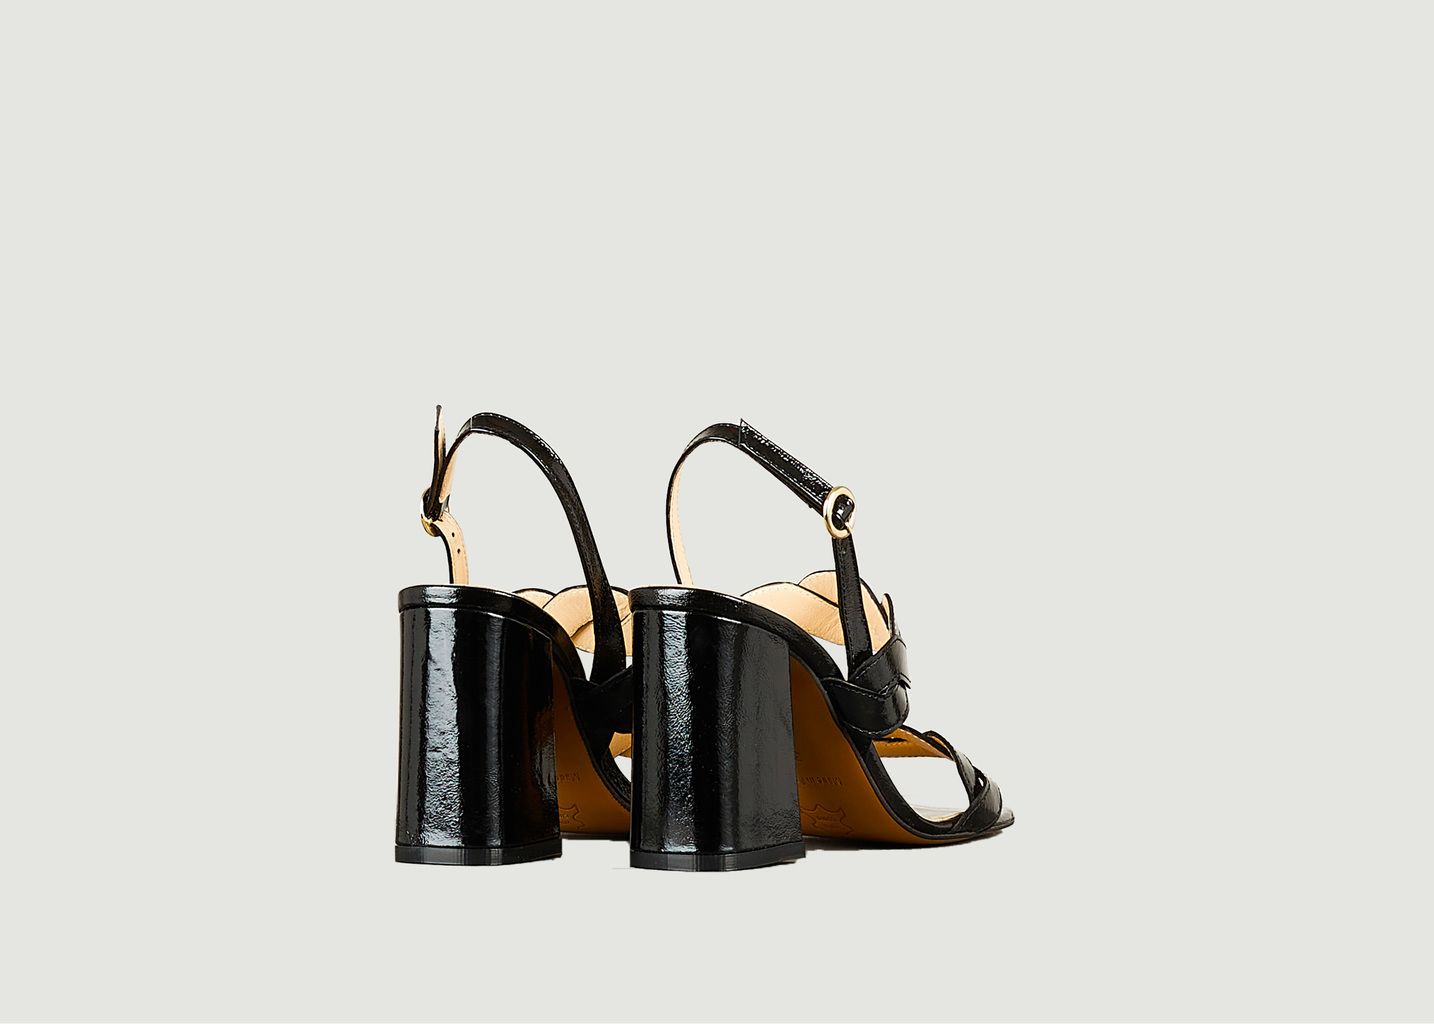 Rhea heel sandal in soft patent leather - Tila March